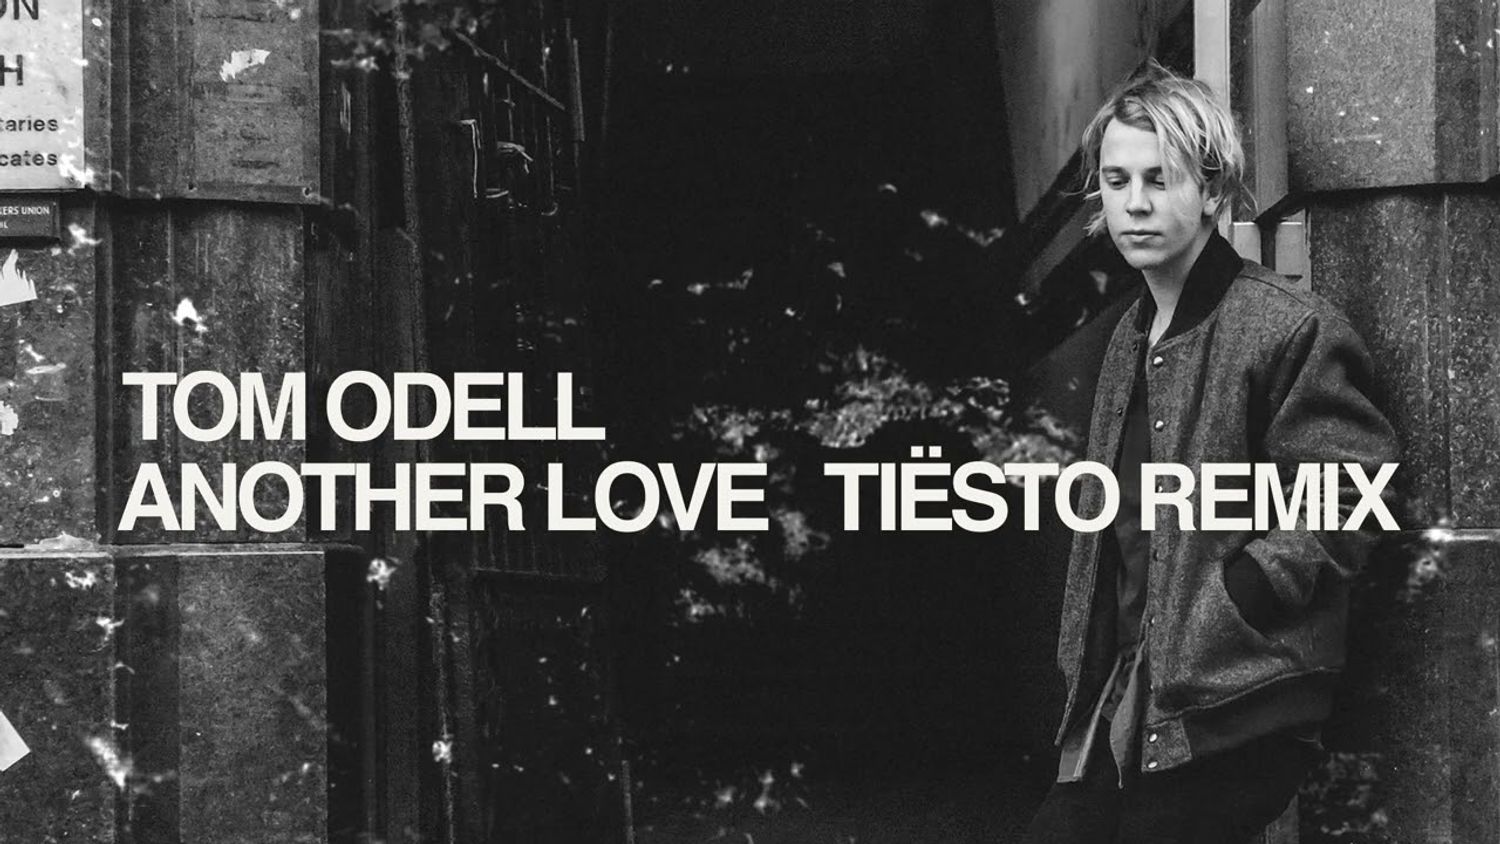  Tiësto remixe Another Love de Tom Odell